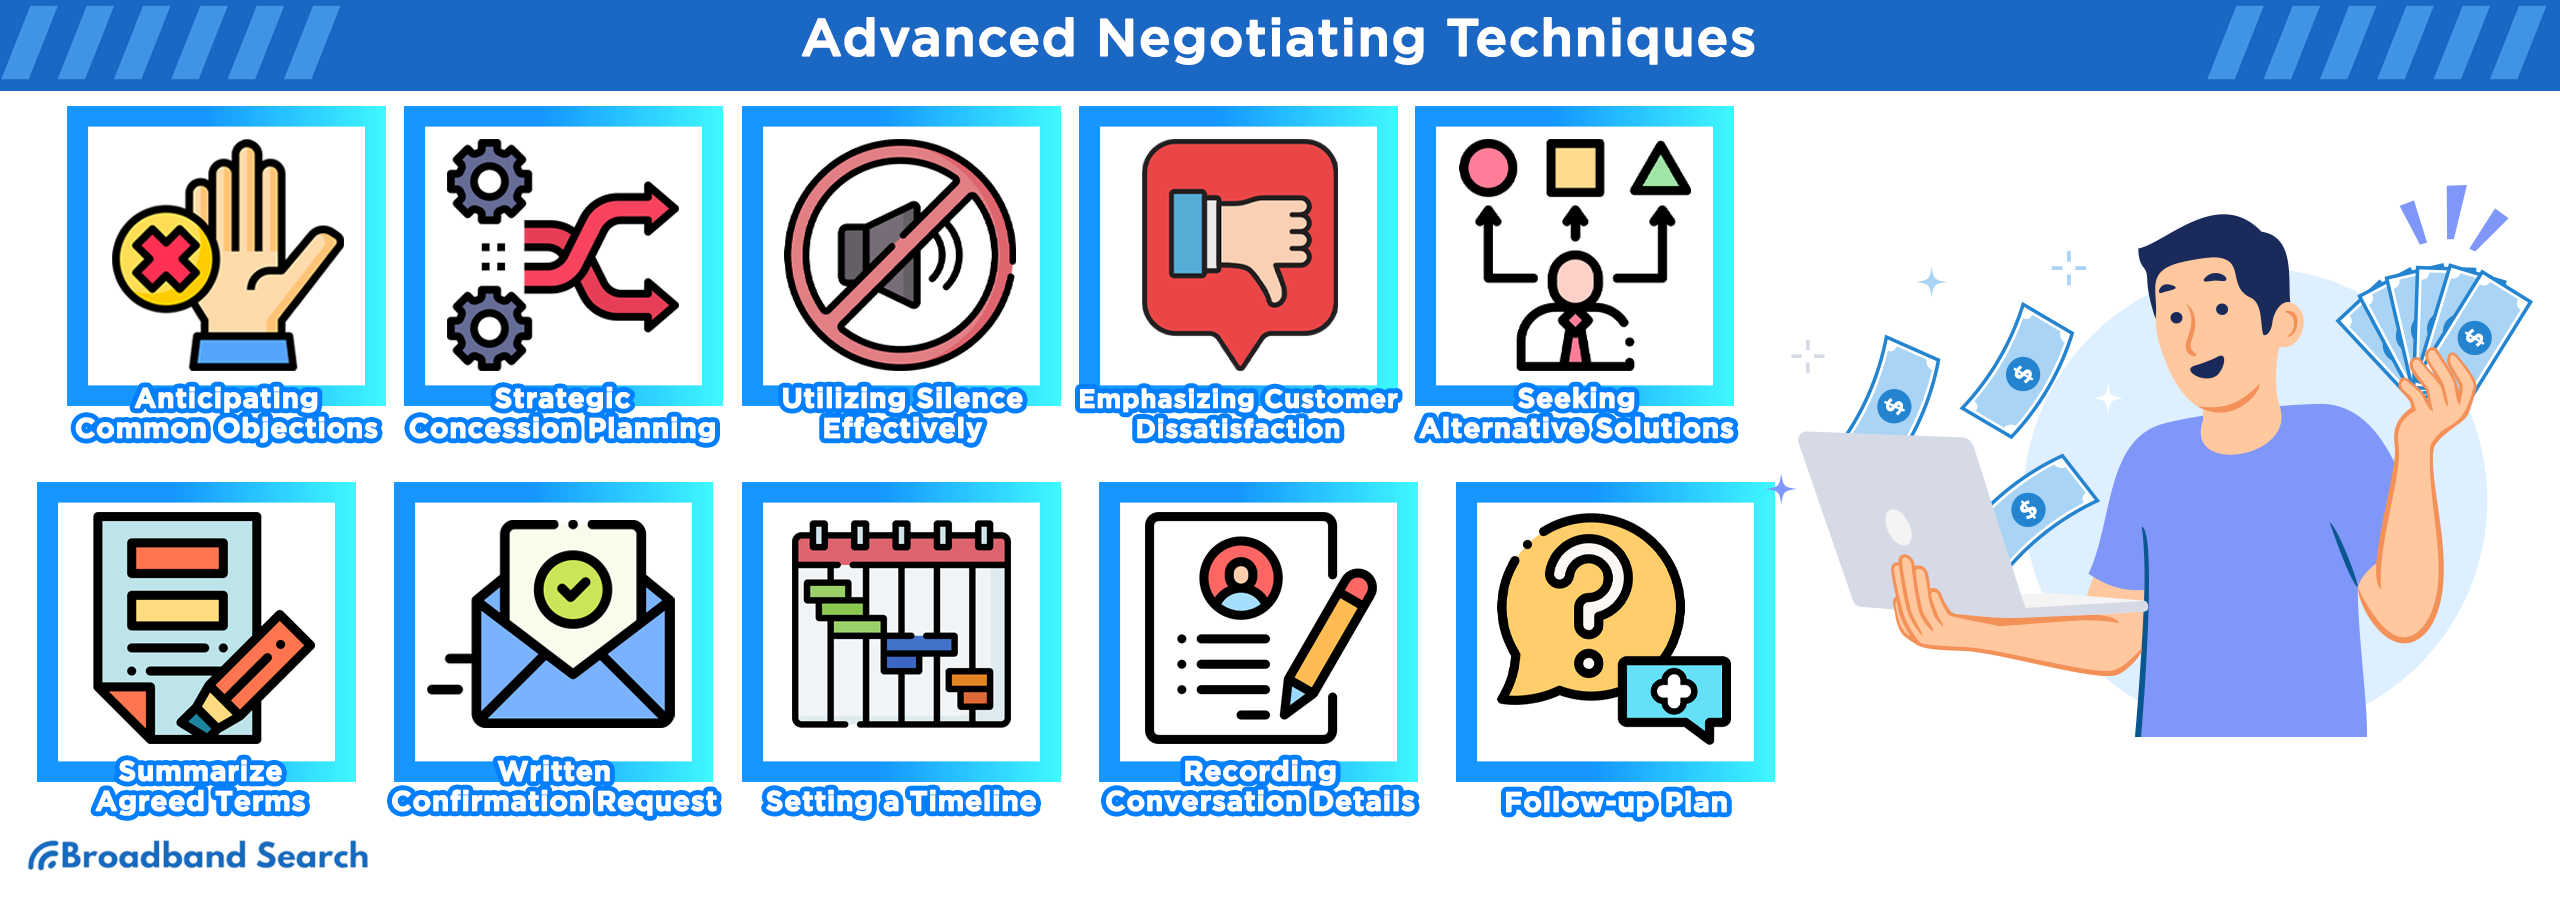 list of advanced negotiating techniques